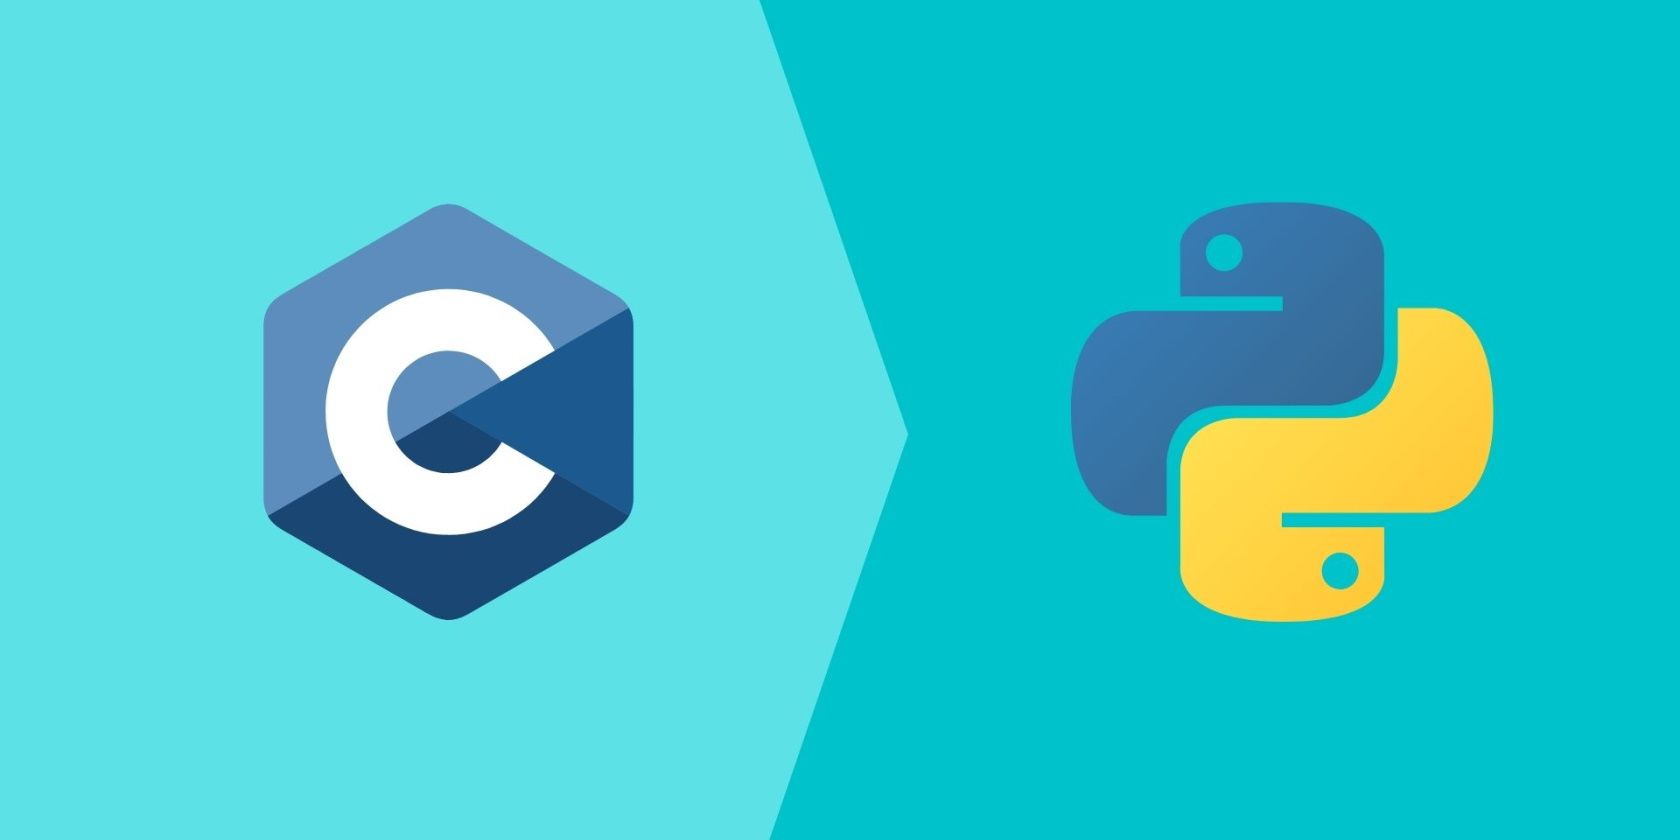 A c logo alongside a Python logo